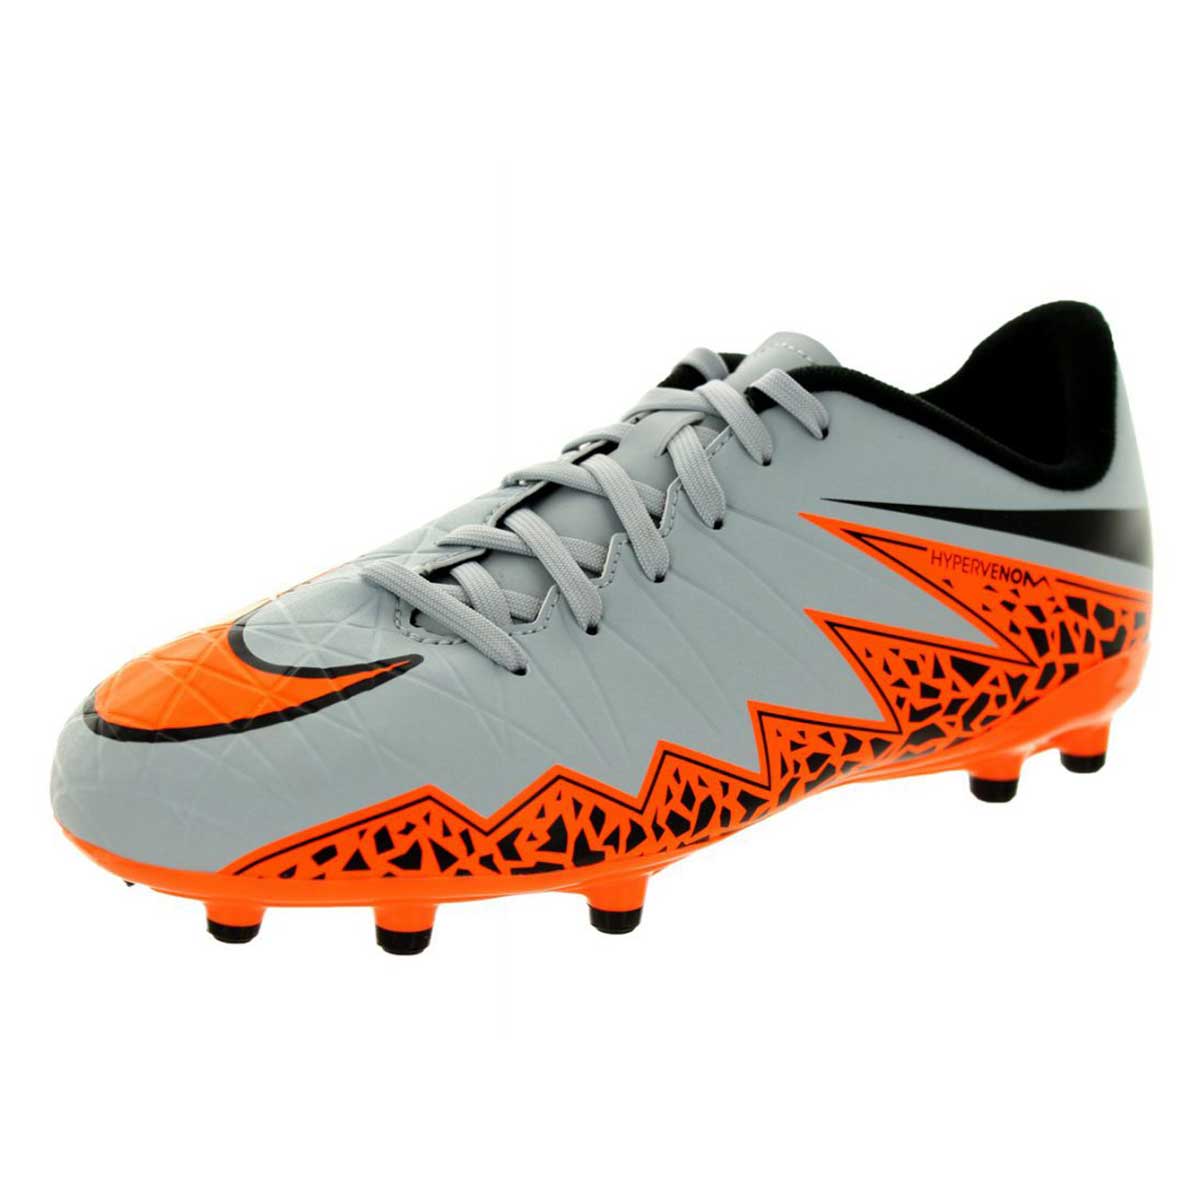 Buy Nike Hypervenom Phelon Ii Fg Junior Football Shoes Online